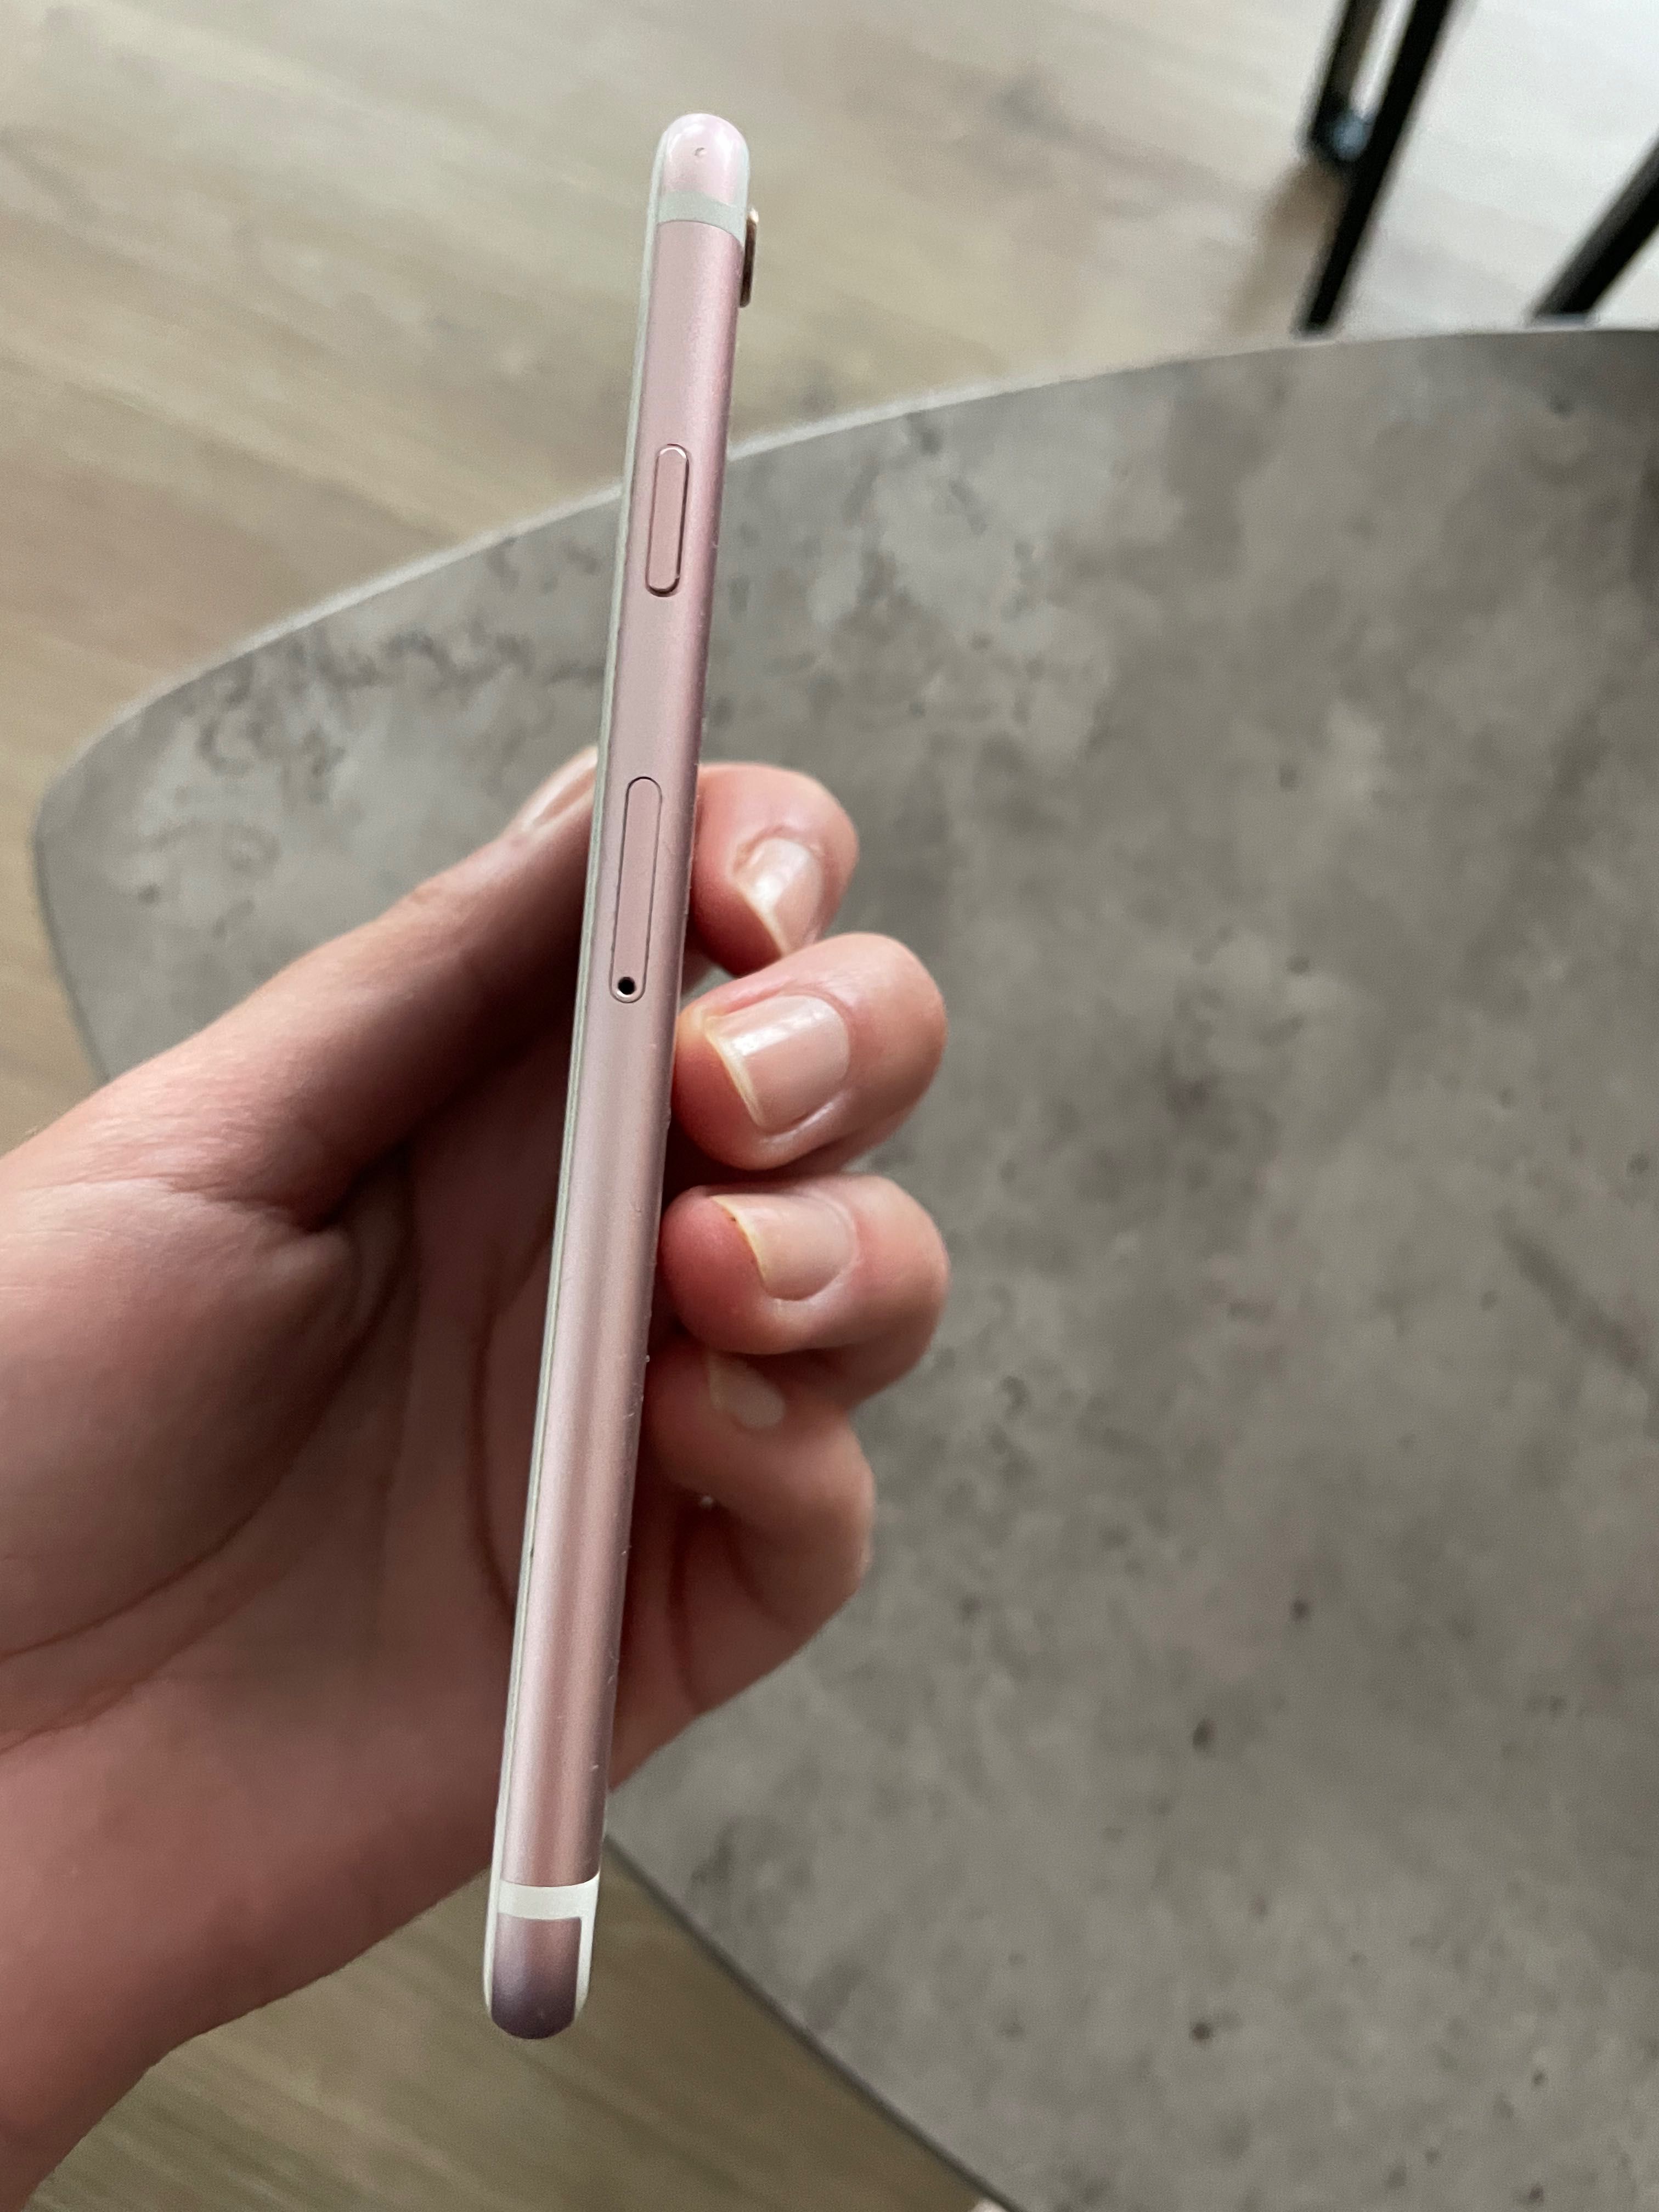 Vand iPhone 6s rosé, in stare excelenta